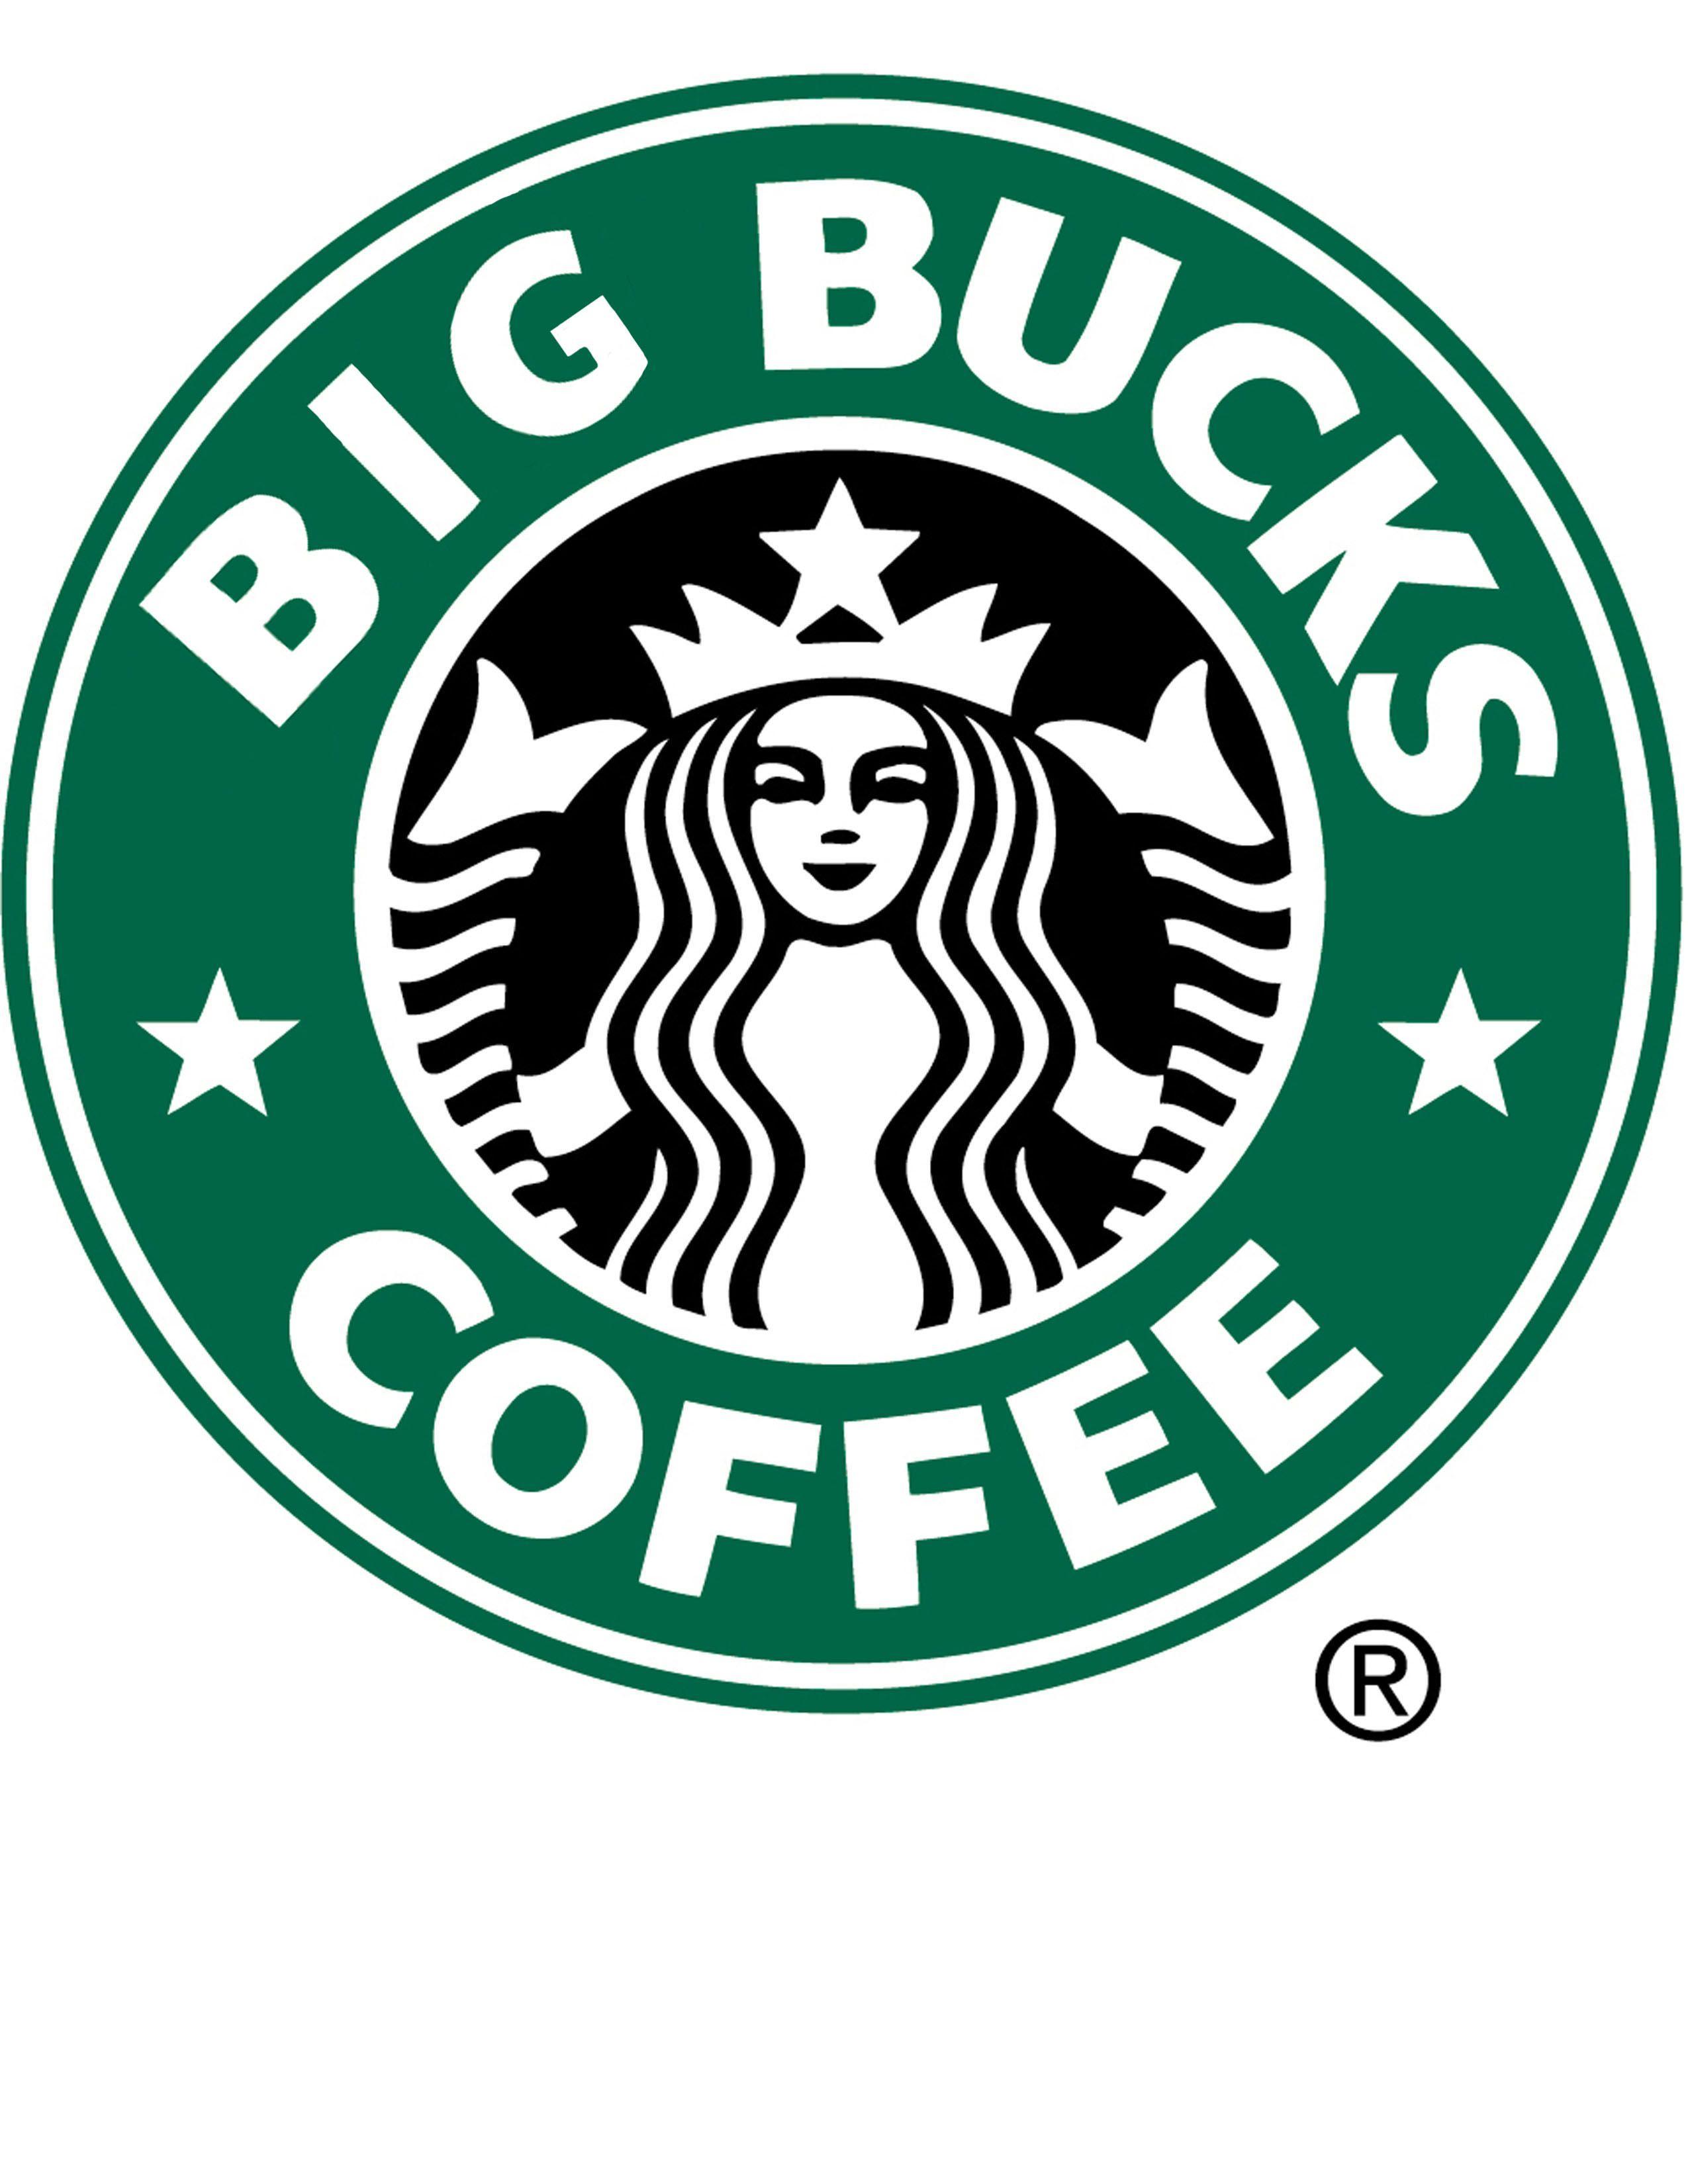 Starbucks Coffee Logo - Starbucks-Coffee-Company logo